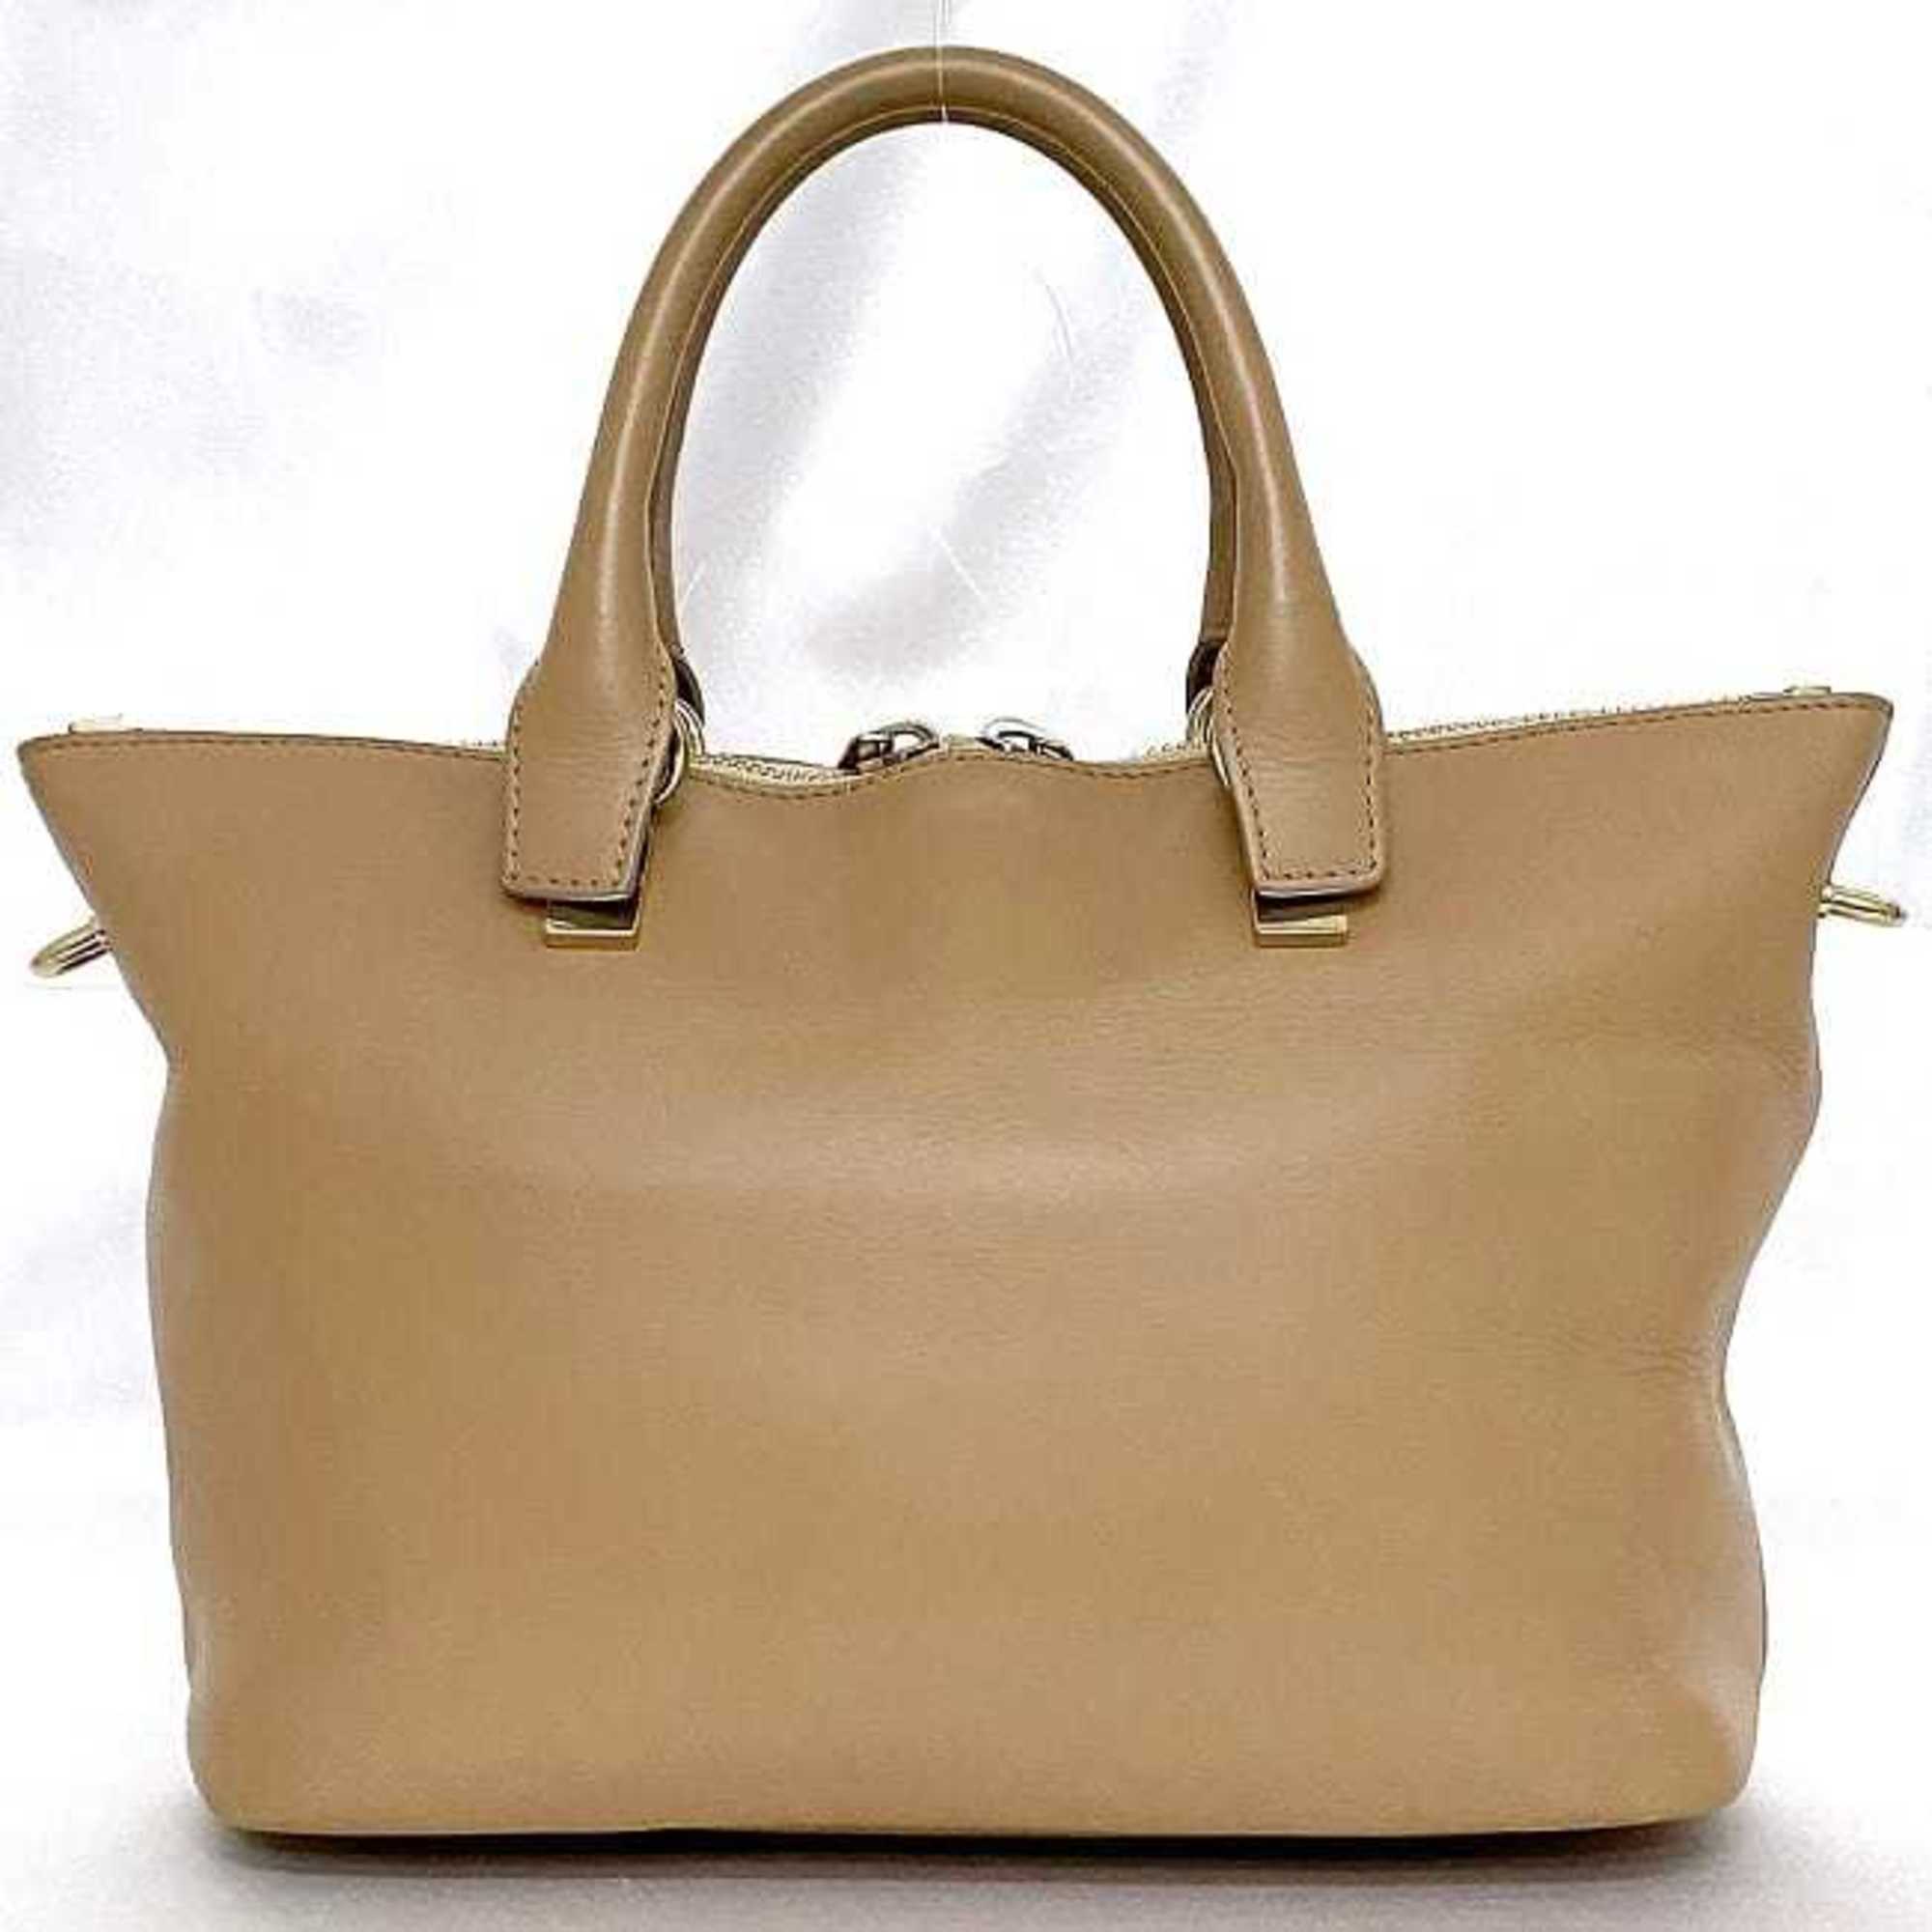 Chloé Chloe 2-way bag beige salmon pink ec-20561 shoulder leather handbag thick strap bicolor ladies